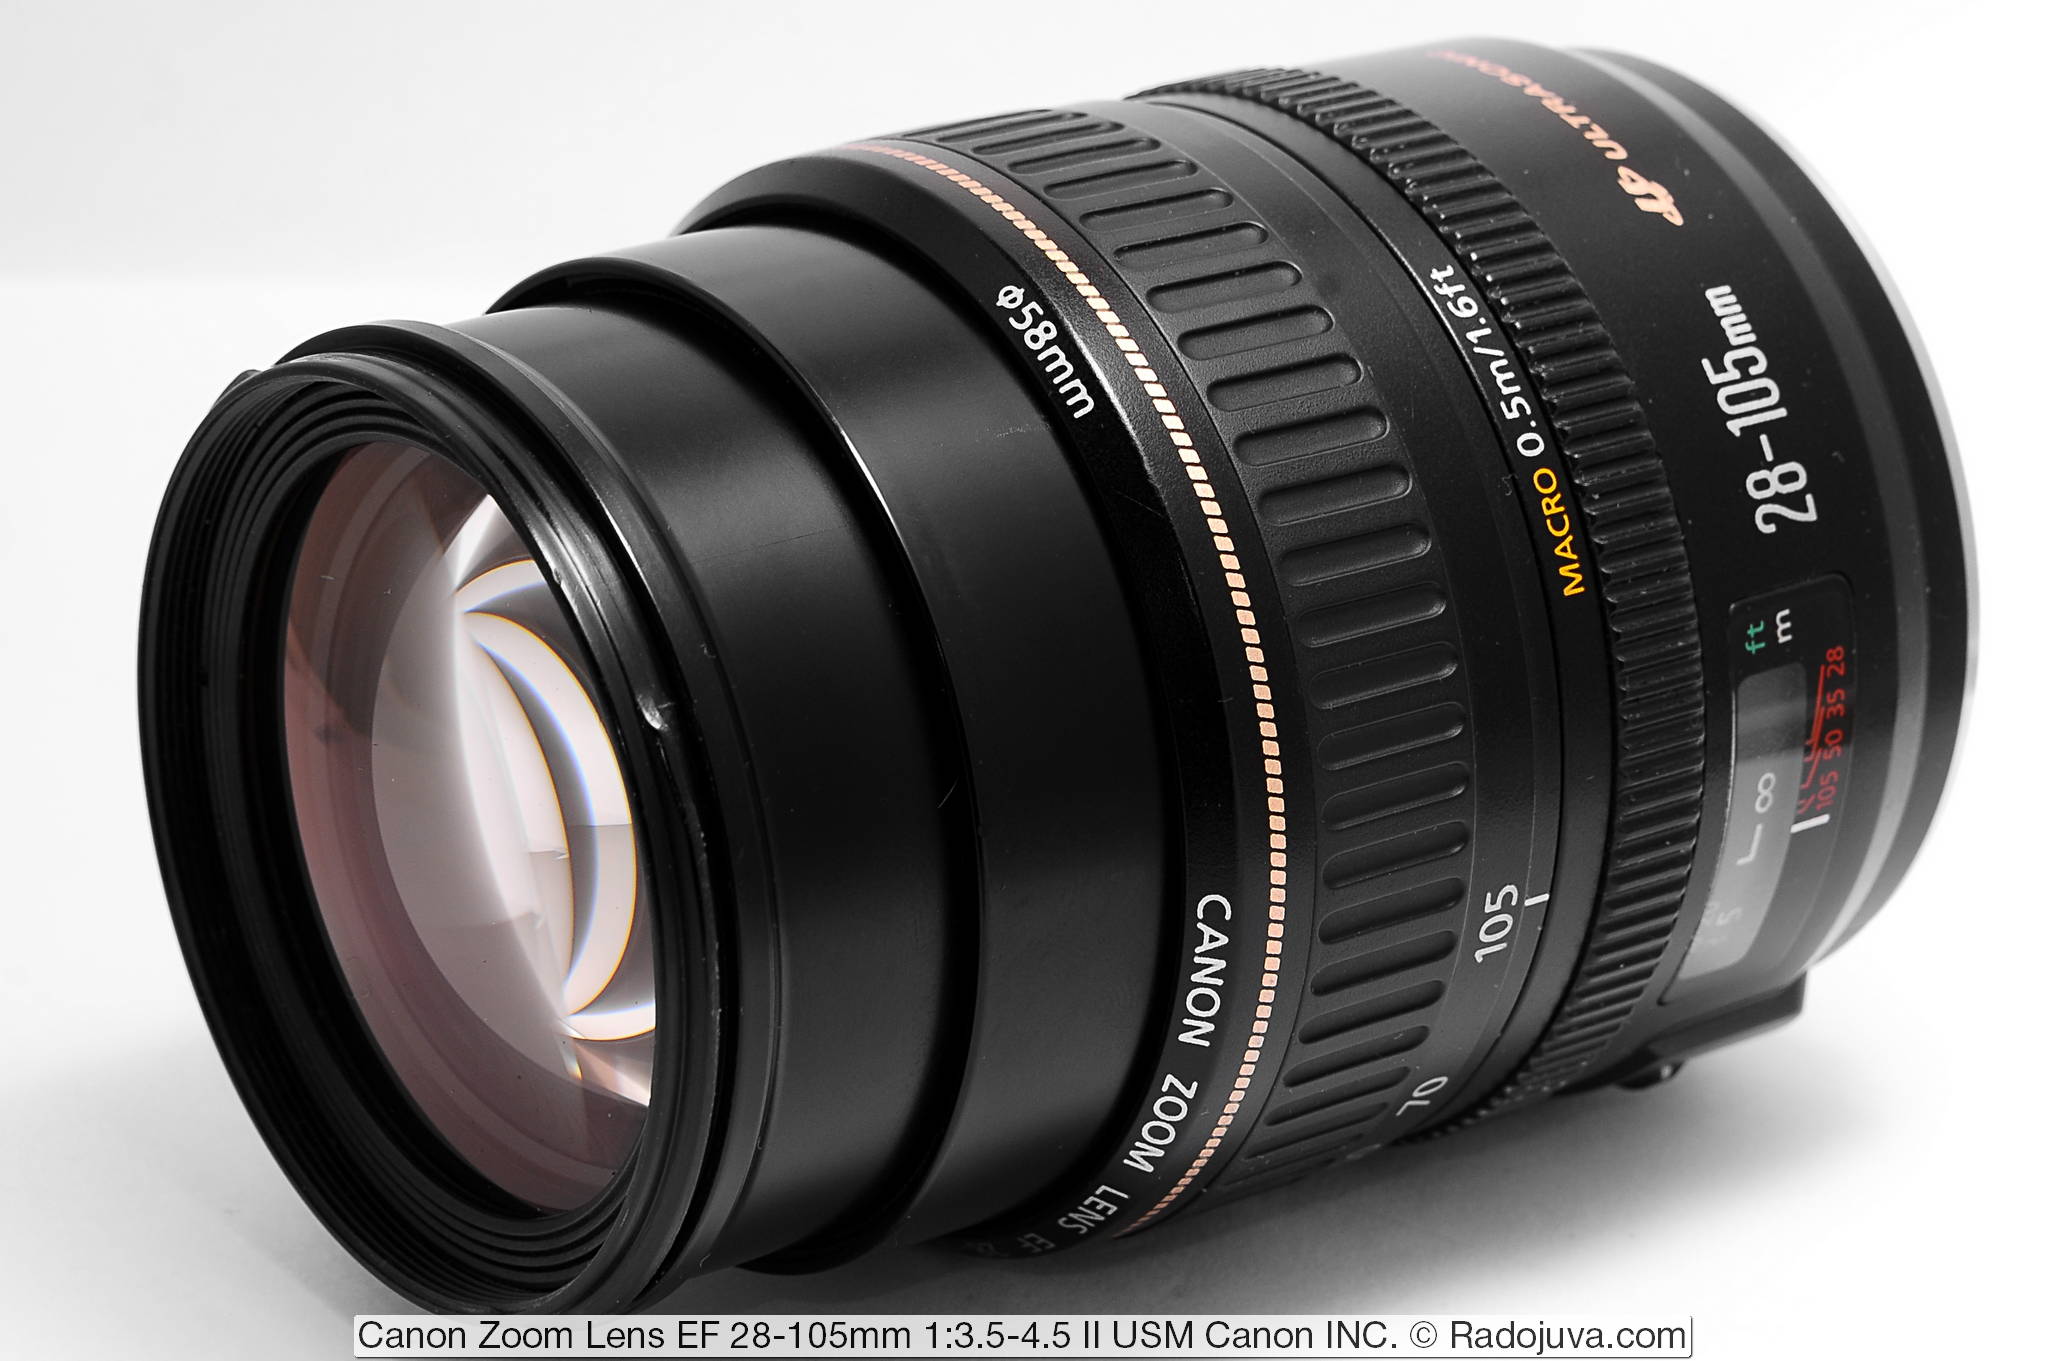 Canon Zoom Lens EF 28-105mm 1: 3.5-4.5 II USM Canon INC.